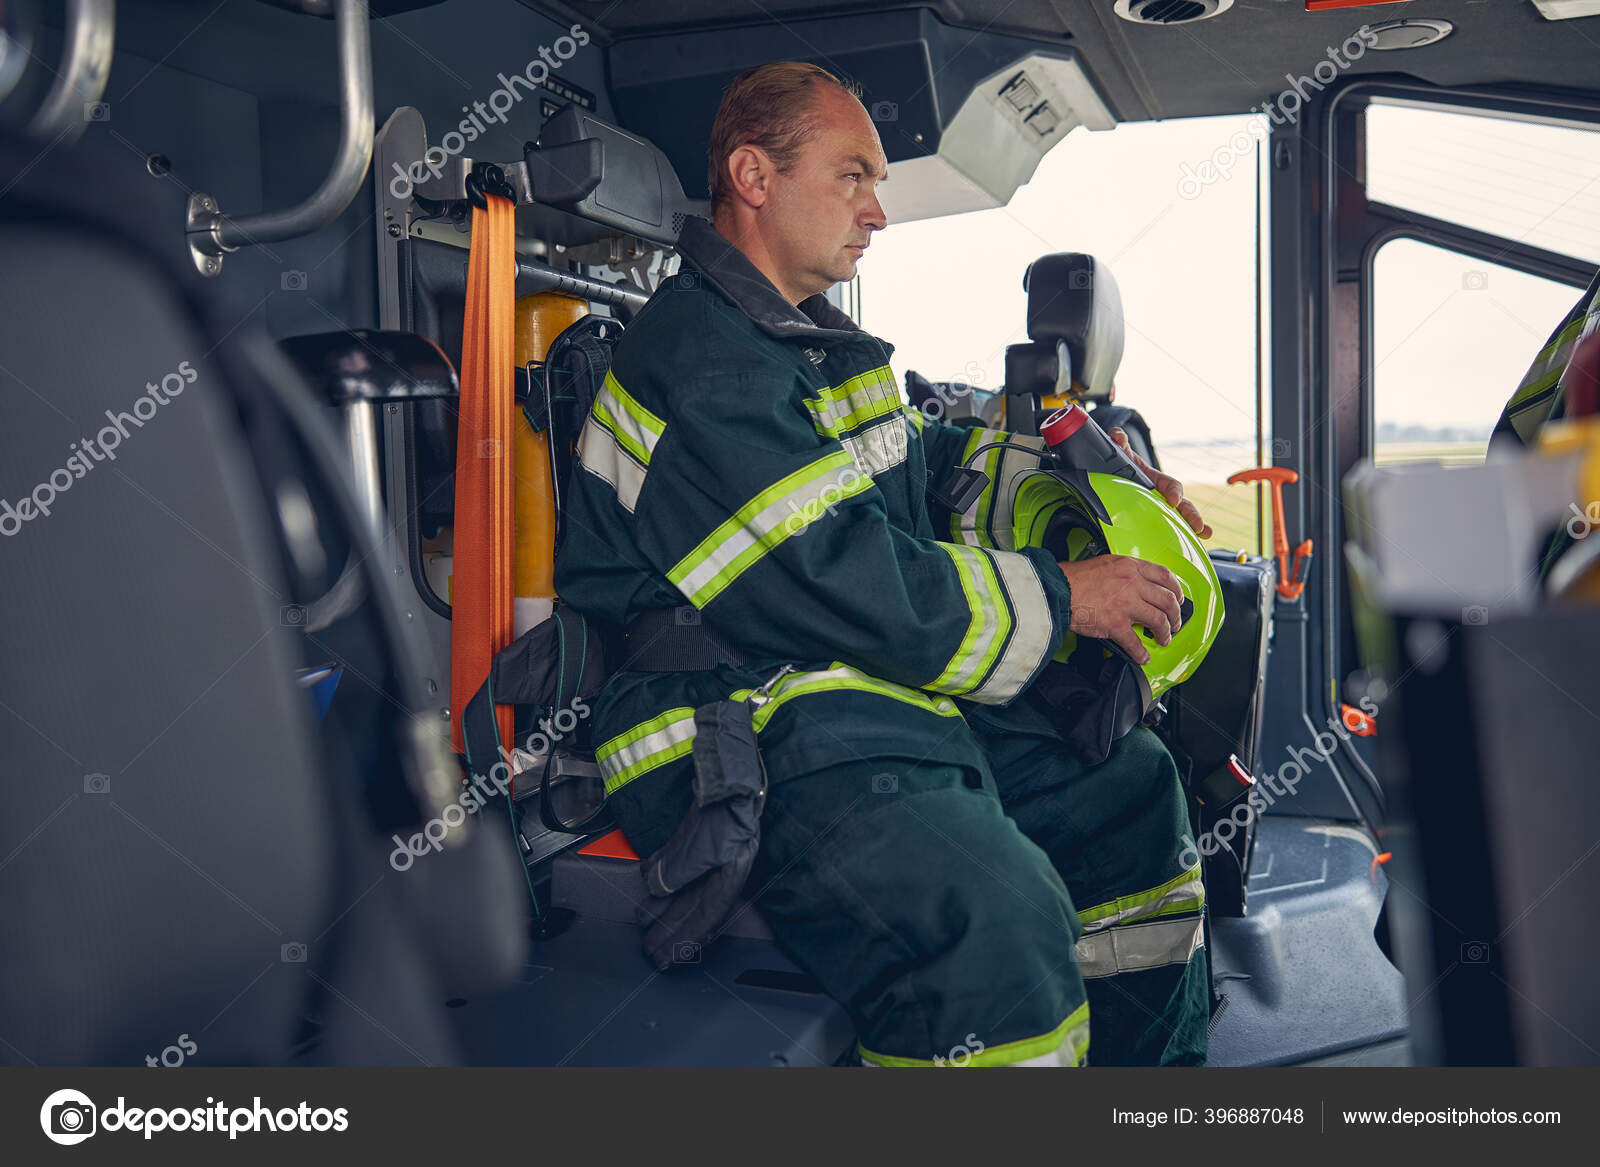 https://st4.depositphotos.com/3258807/39688/i/1600/depositphotos_396887048-stock-photo-photo-of-adult-fireman-with.jpg